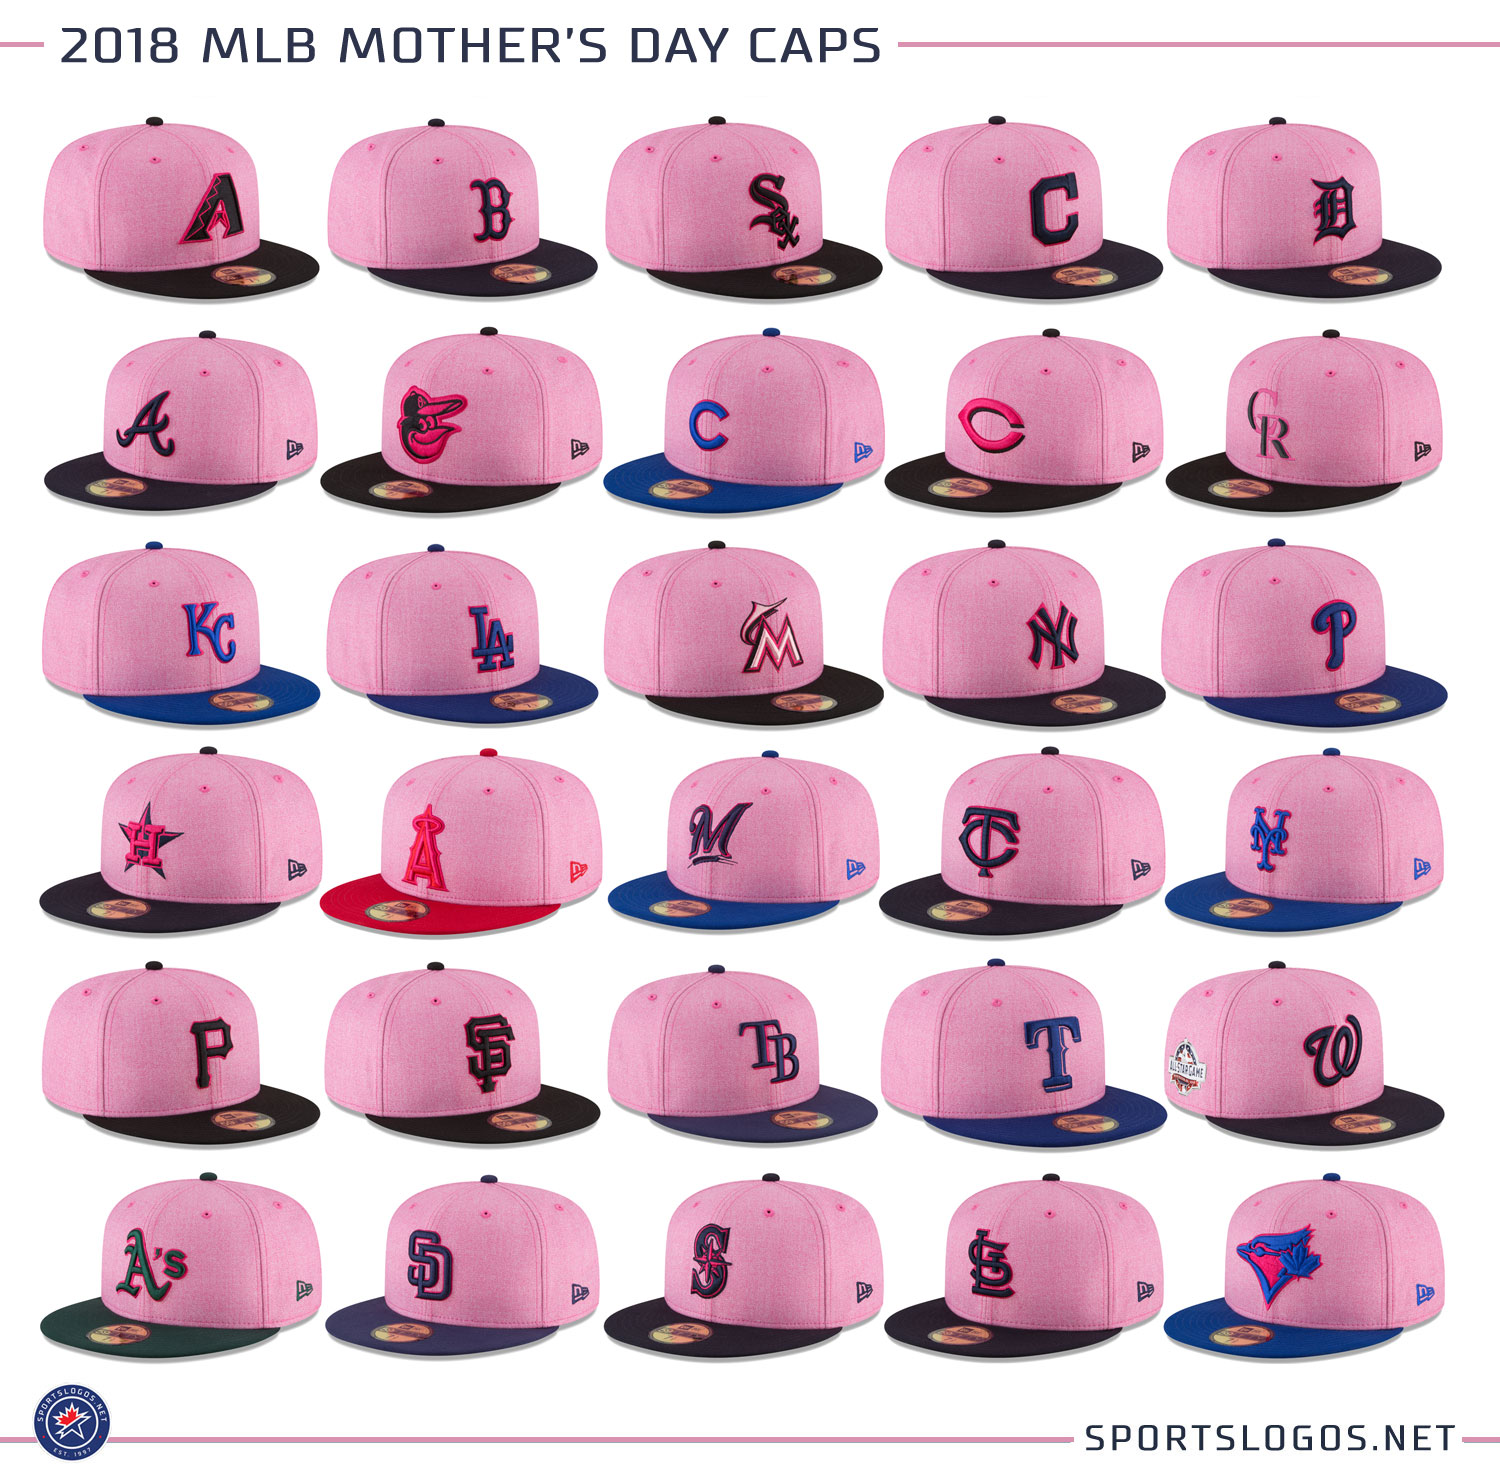 For Mom, All MLB Teams Wearing Pink – SportsLogos.Net News